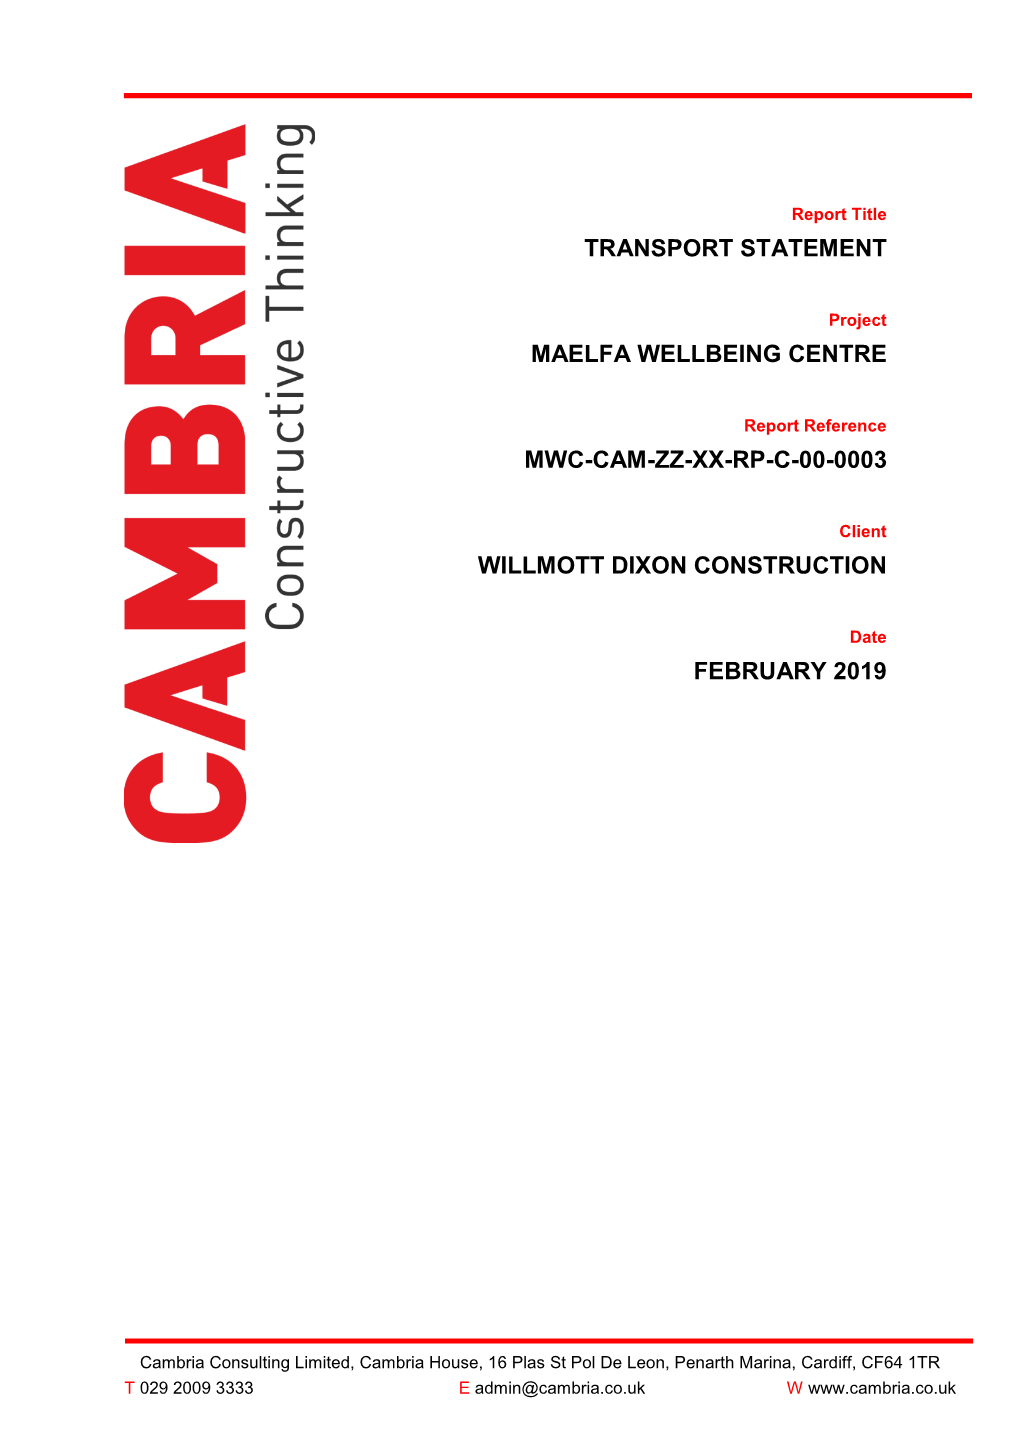 Transport Statement Maelfa Wellbeing Centre Mwc-Cam